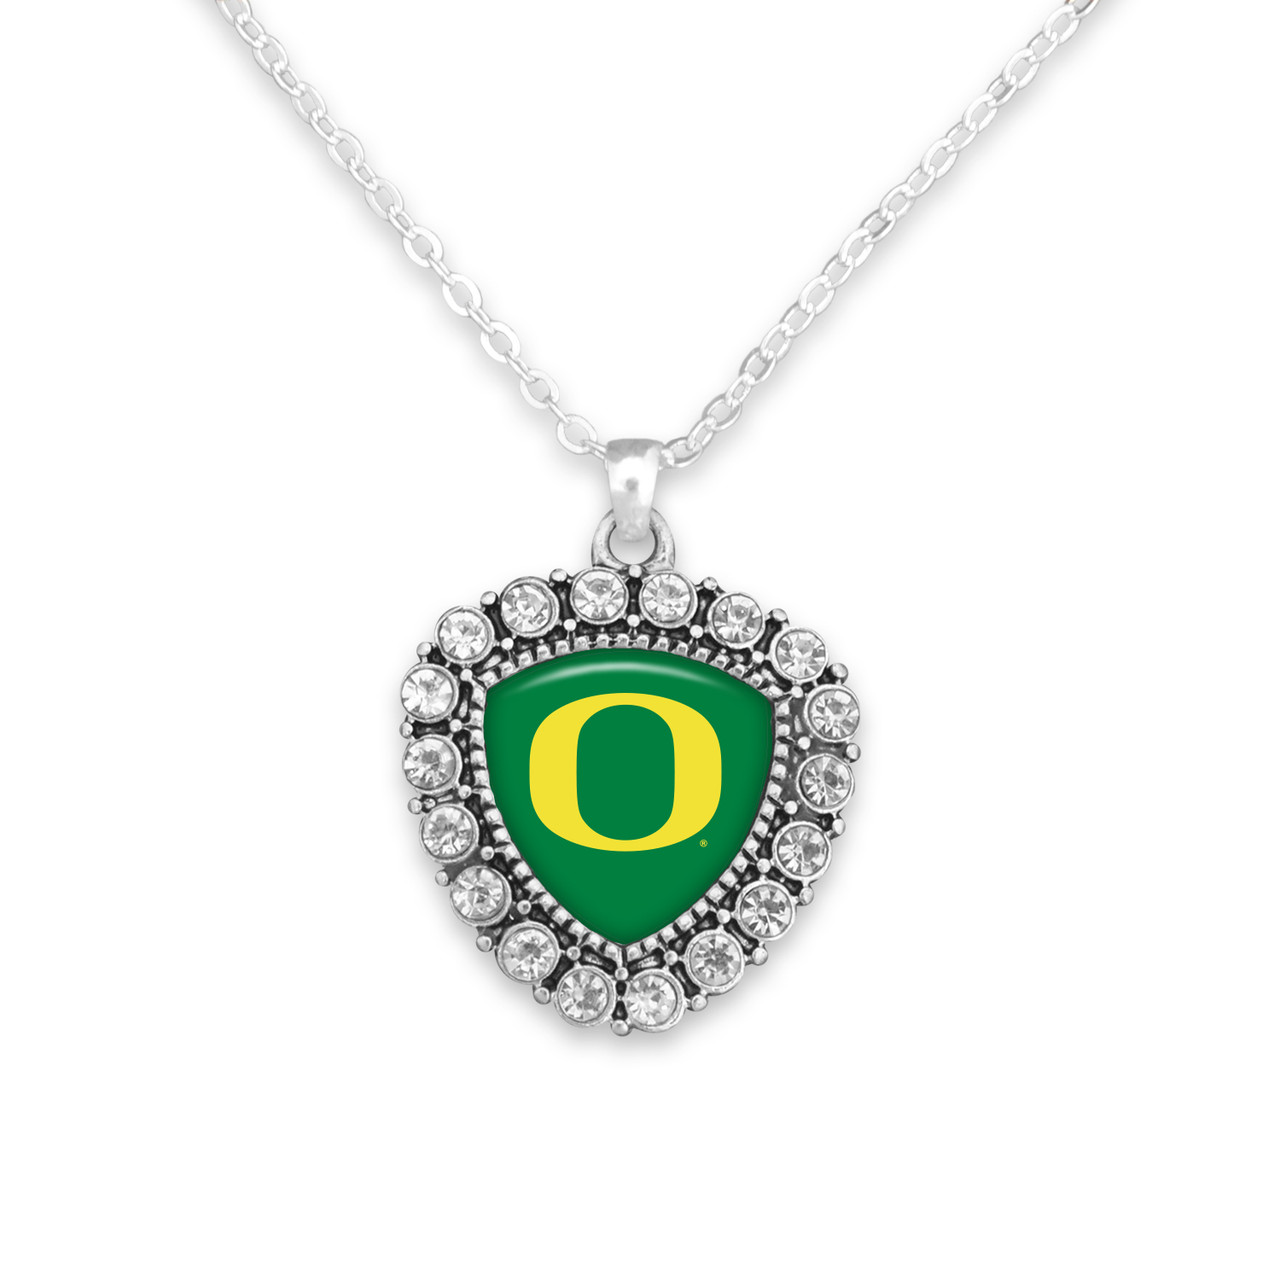 Oregon Ducks Necklace- Brooke